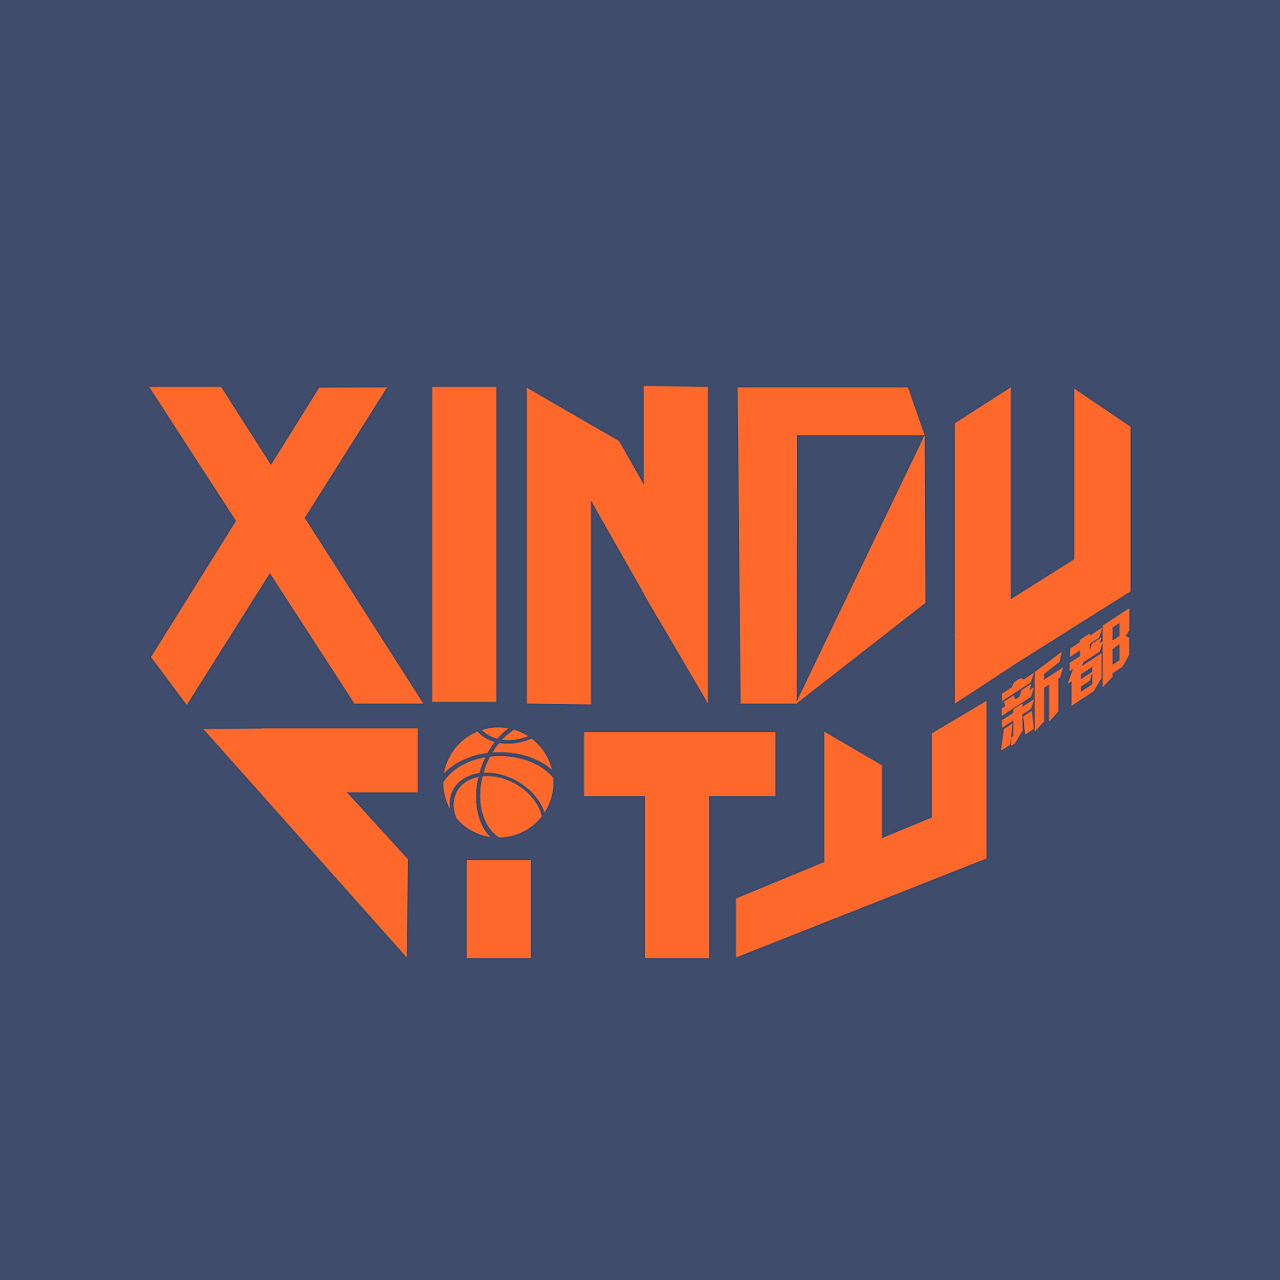 XINDU CITY 篮球队 logo|平面|标志|kamijy - 原创